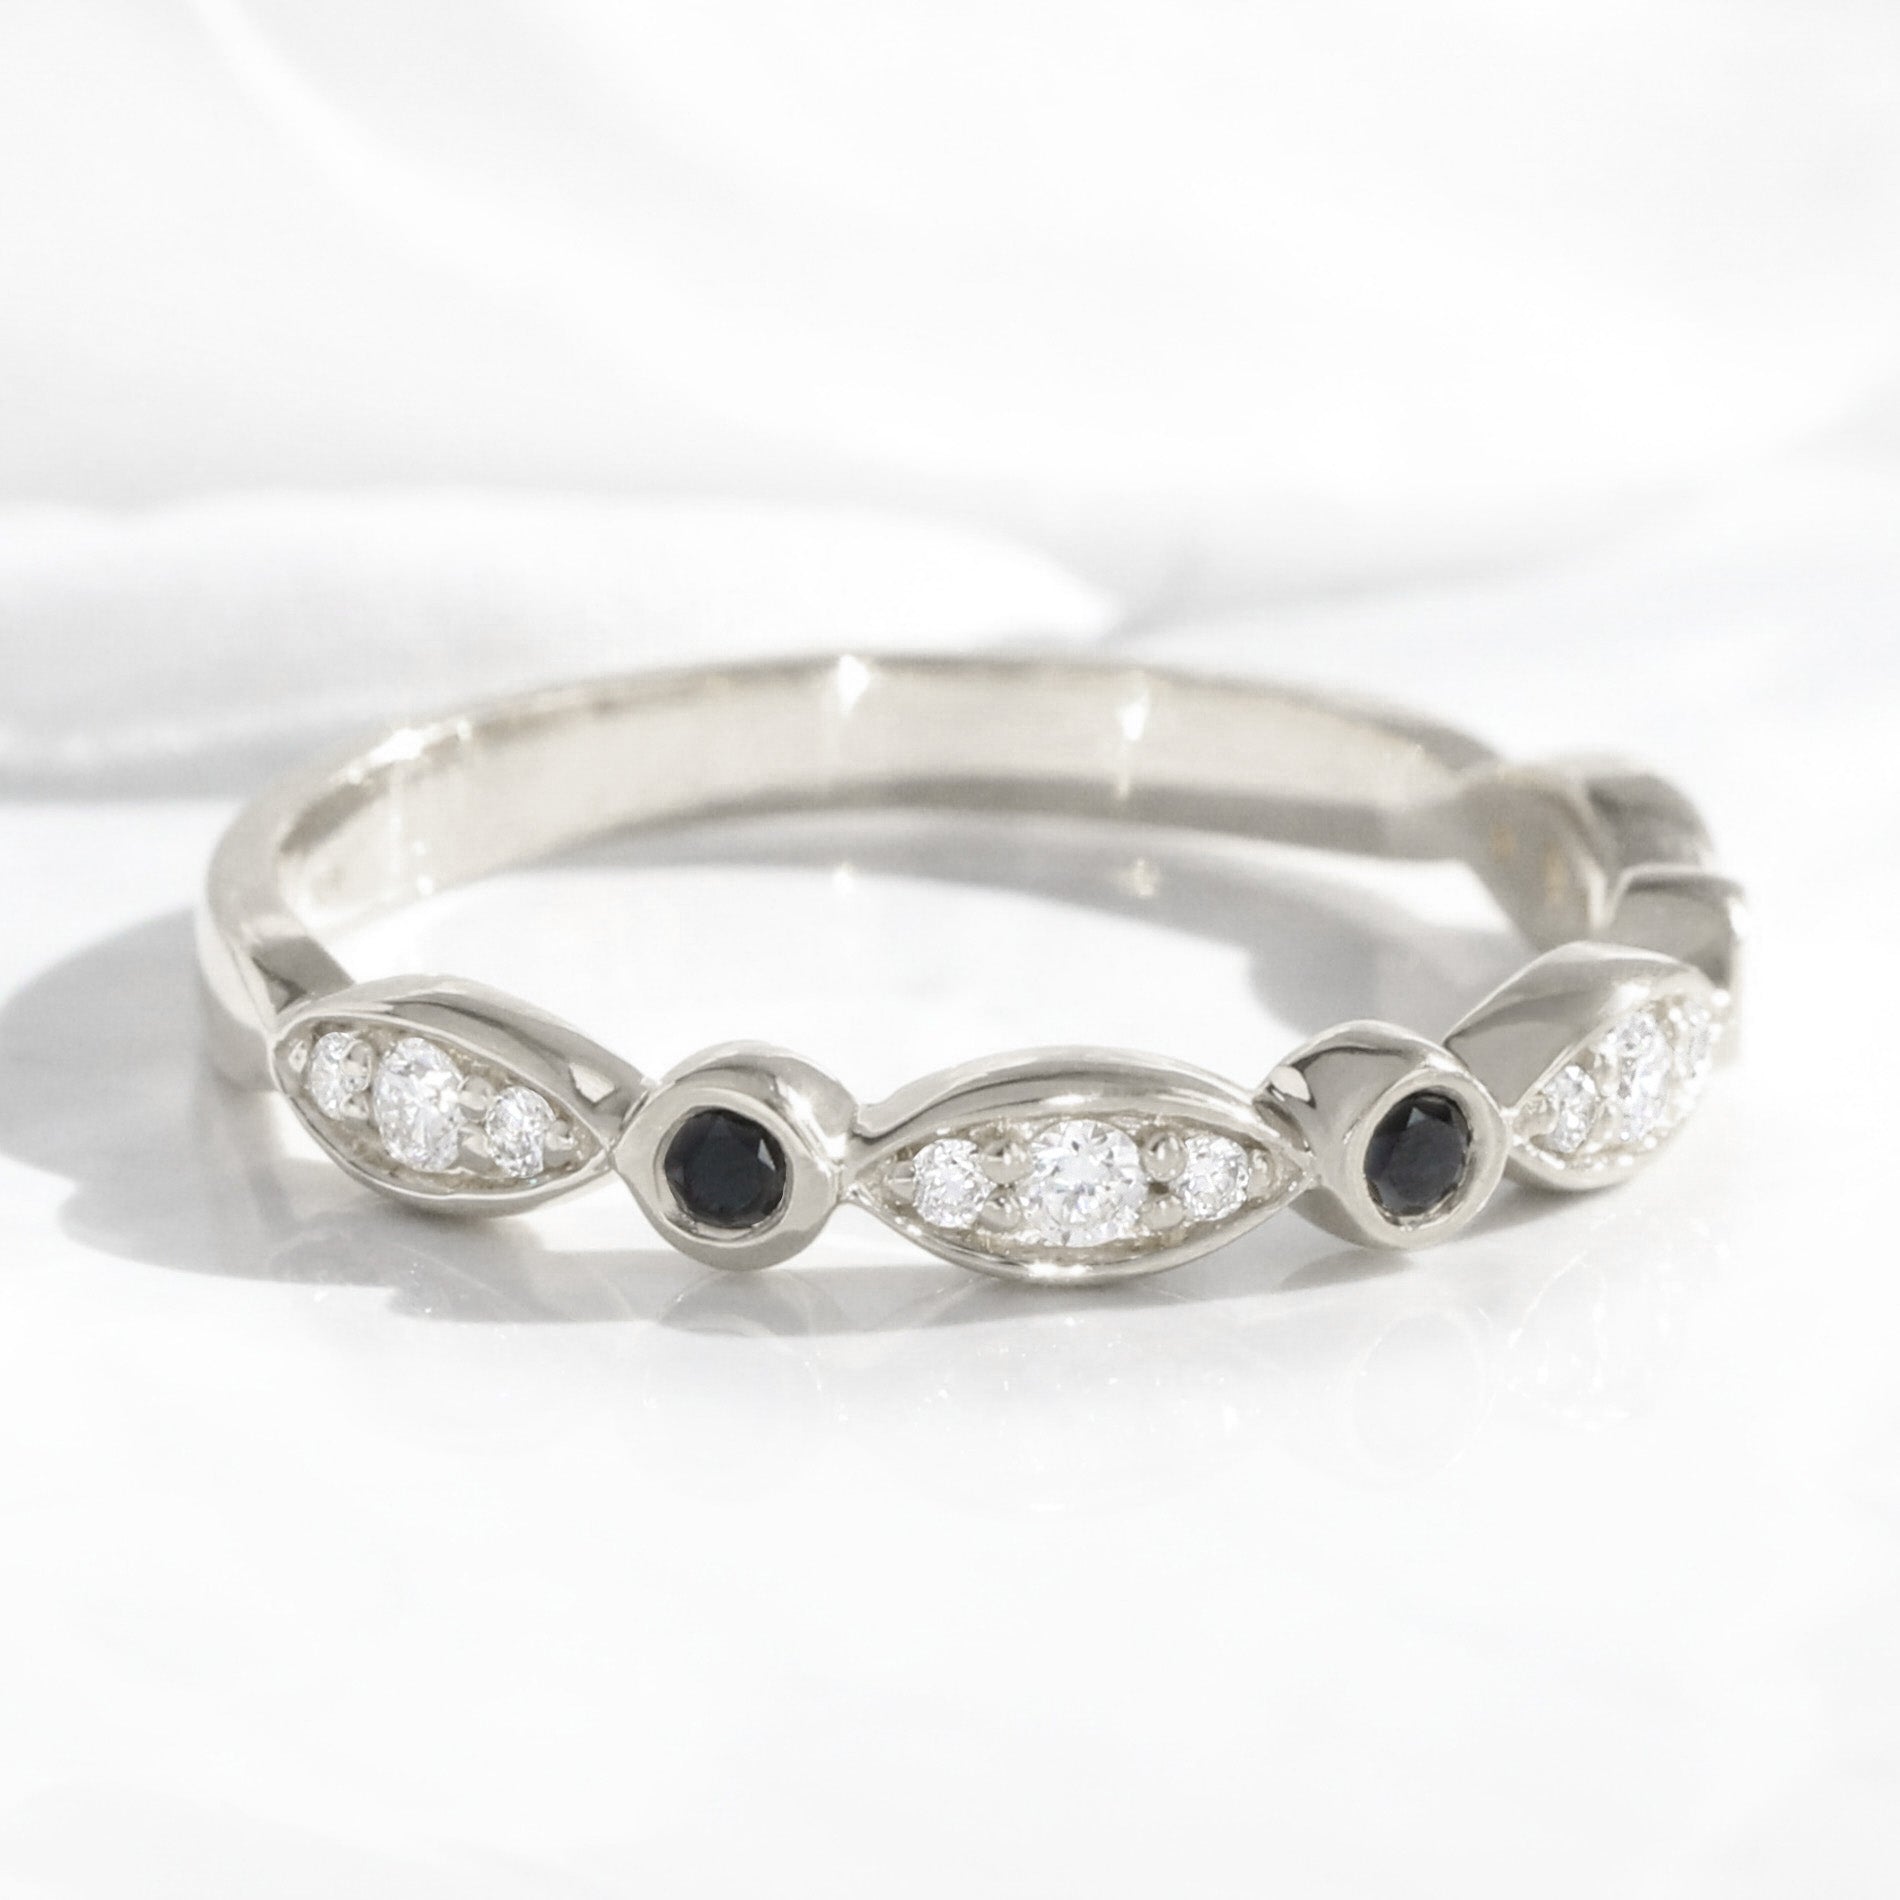 Bezel white and black diamond wedding ring white gold scalloped half eternity band la more design jewelry